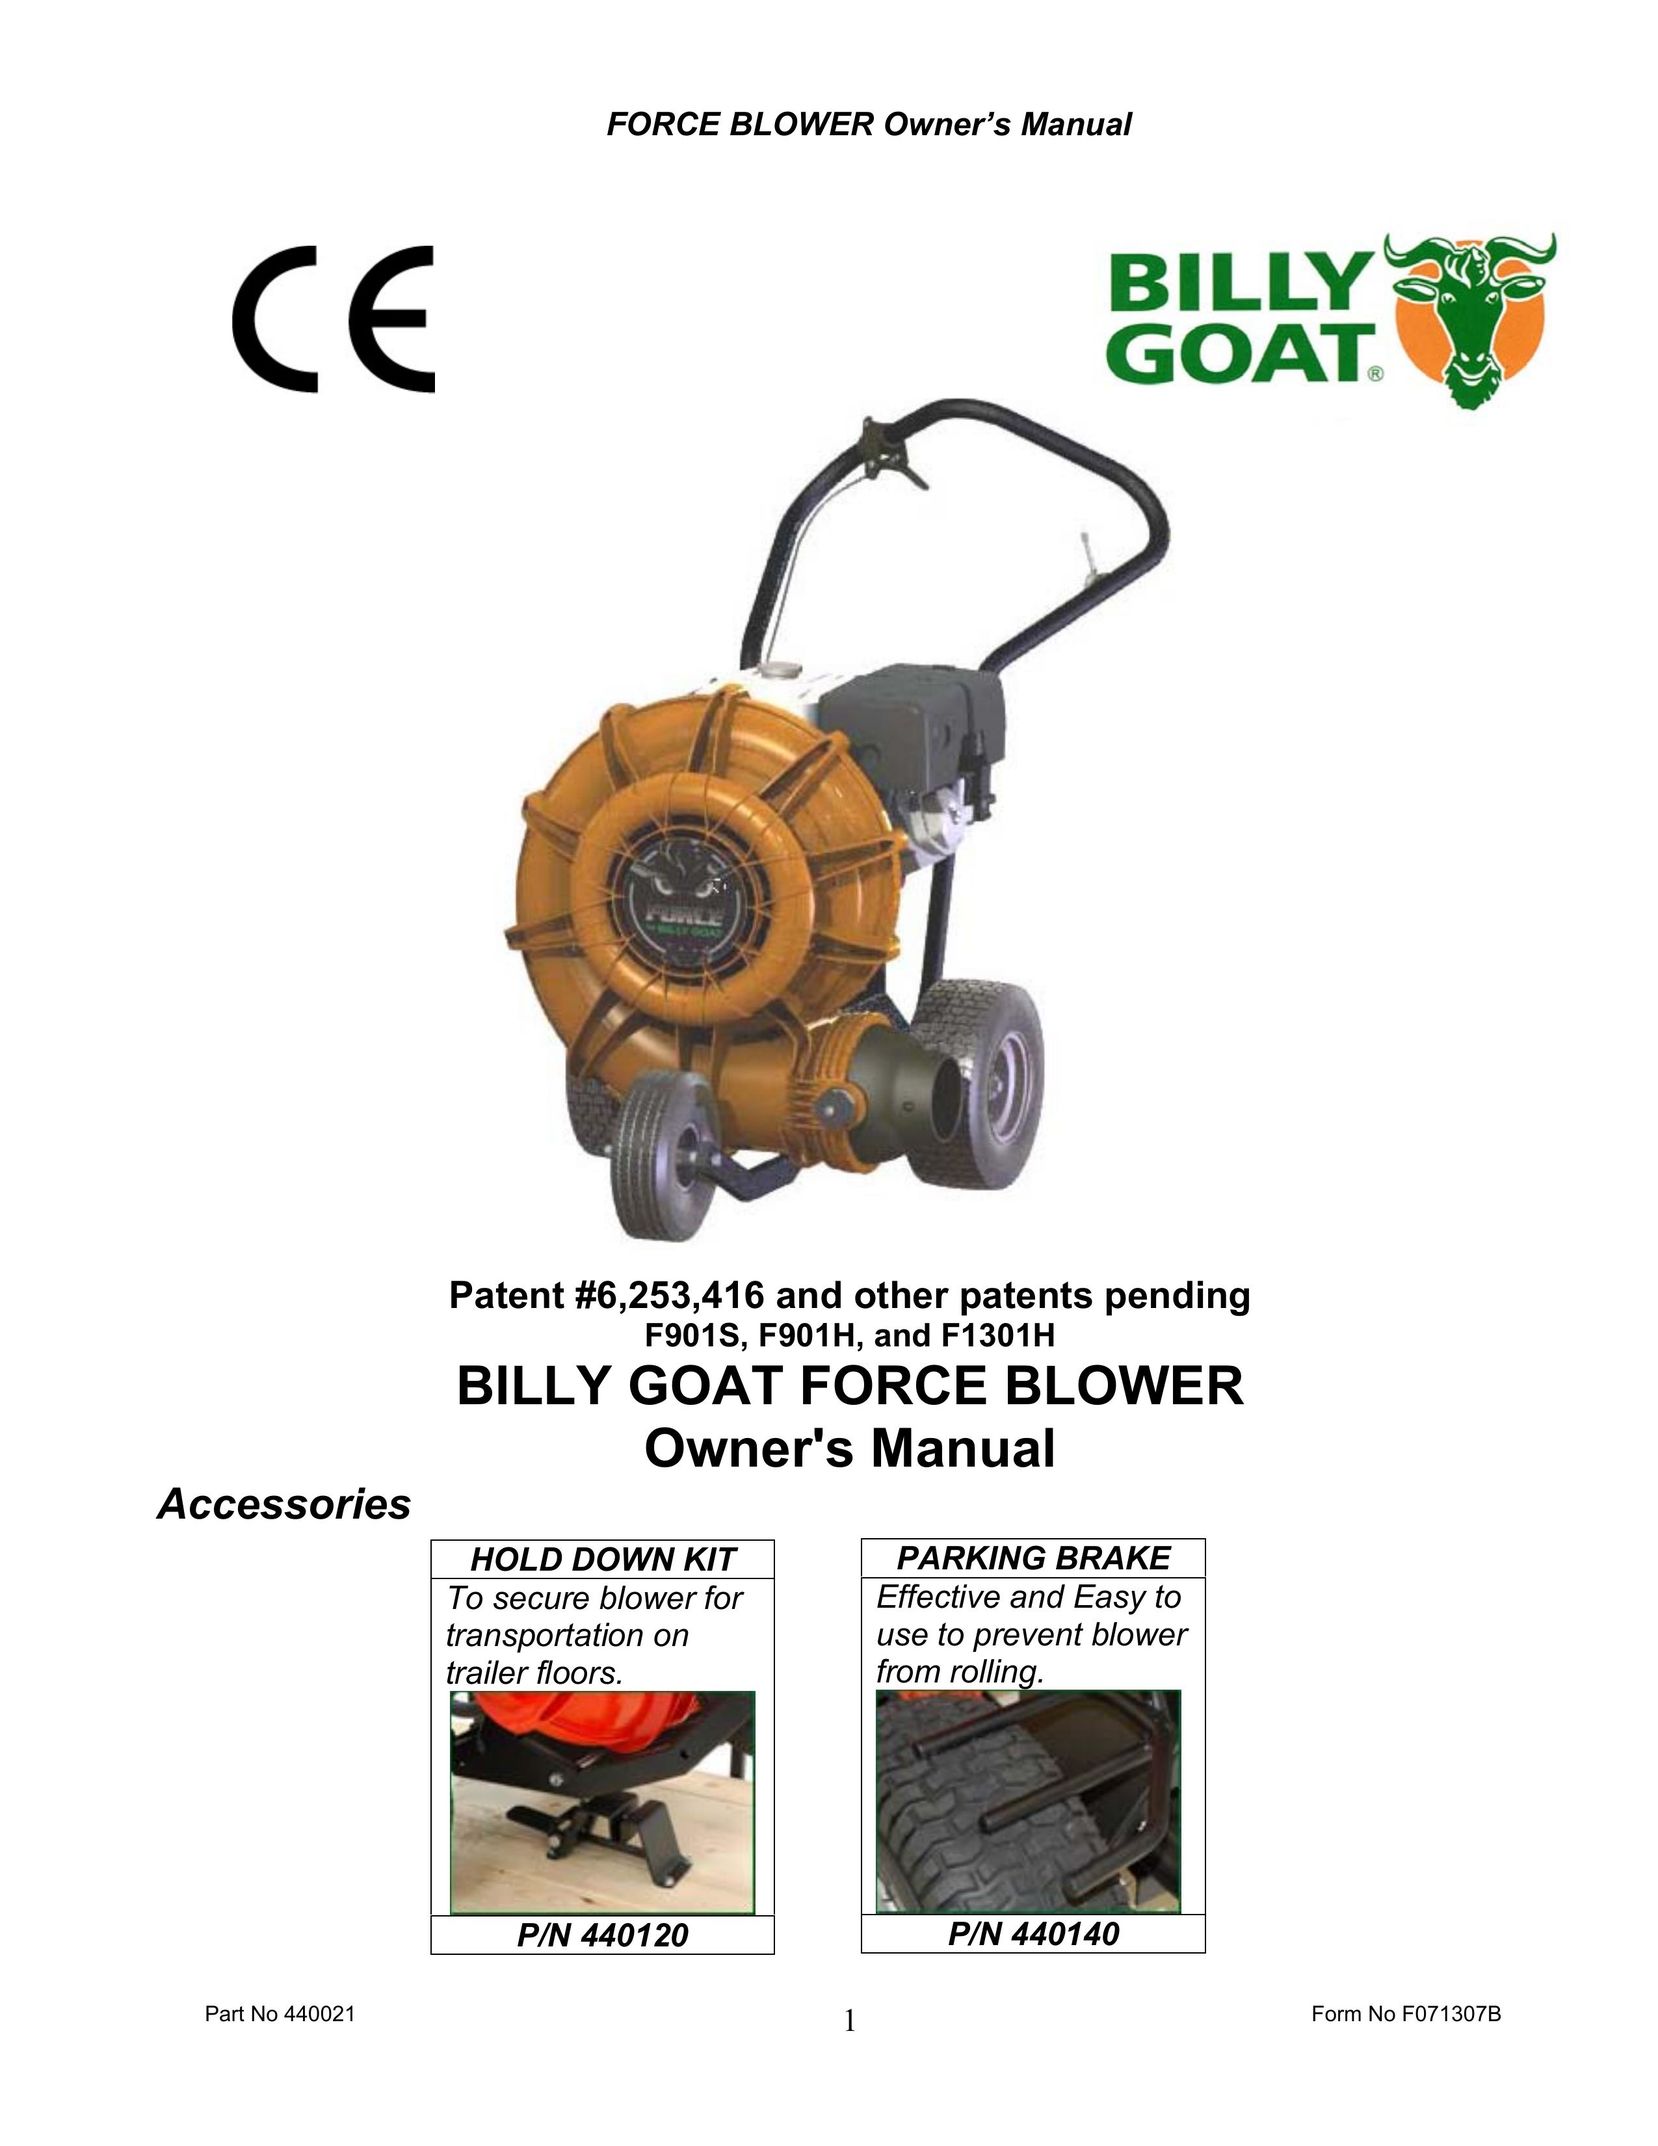 Billy Goat F1301H Work Light User Manual